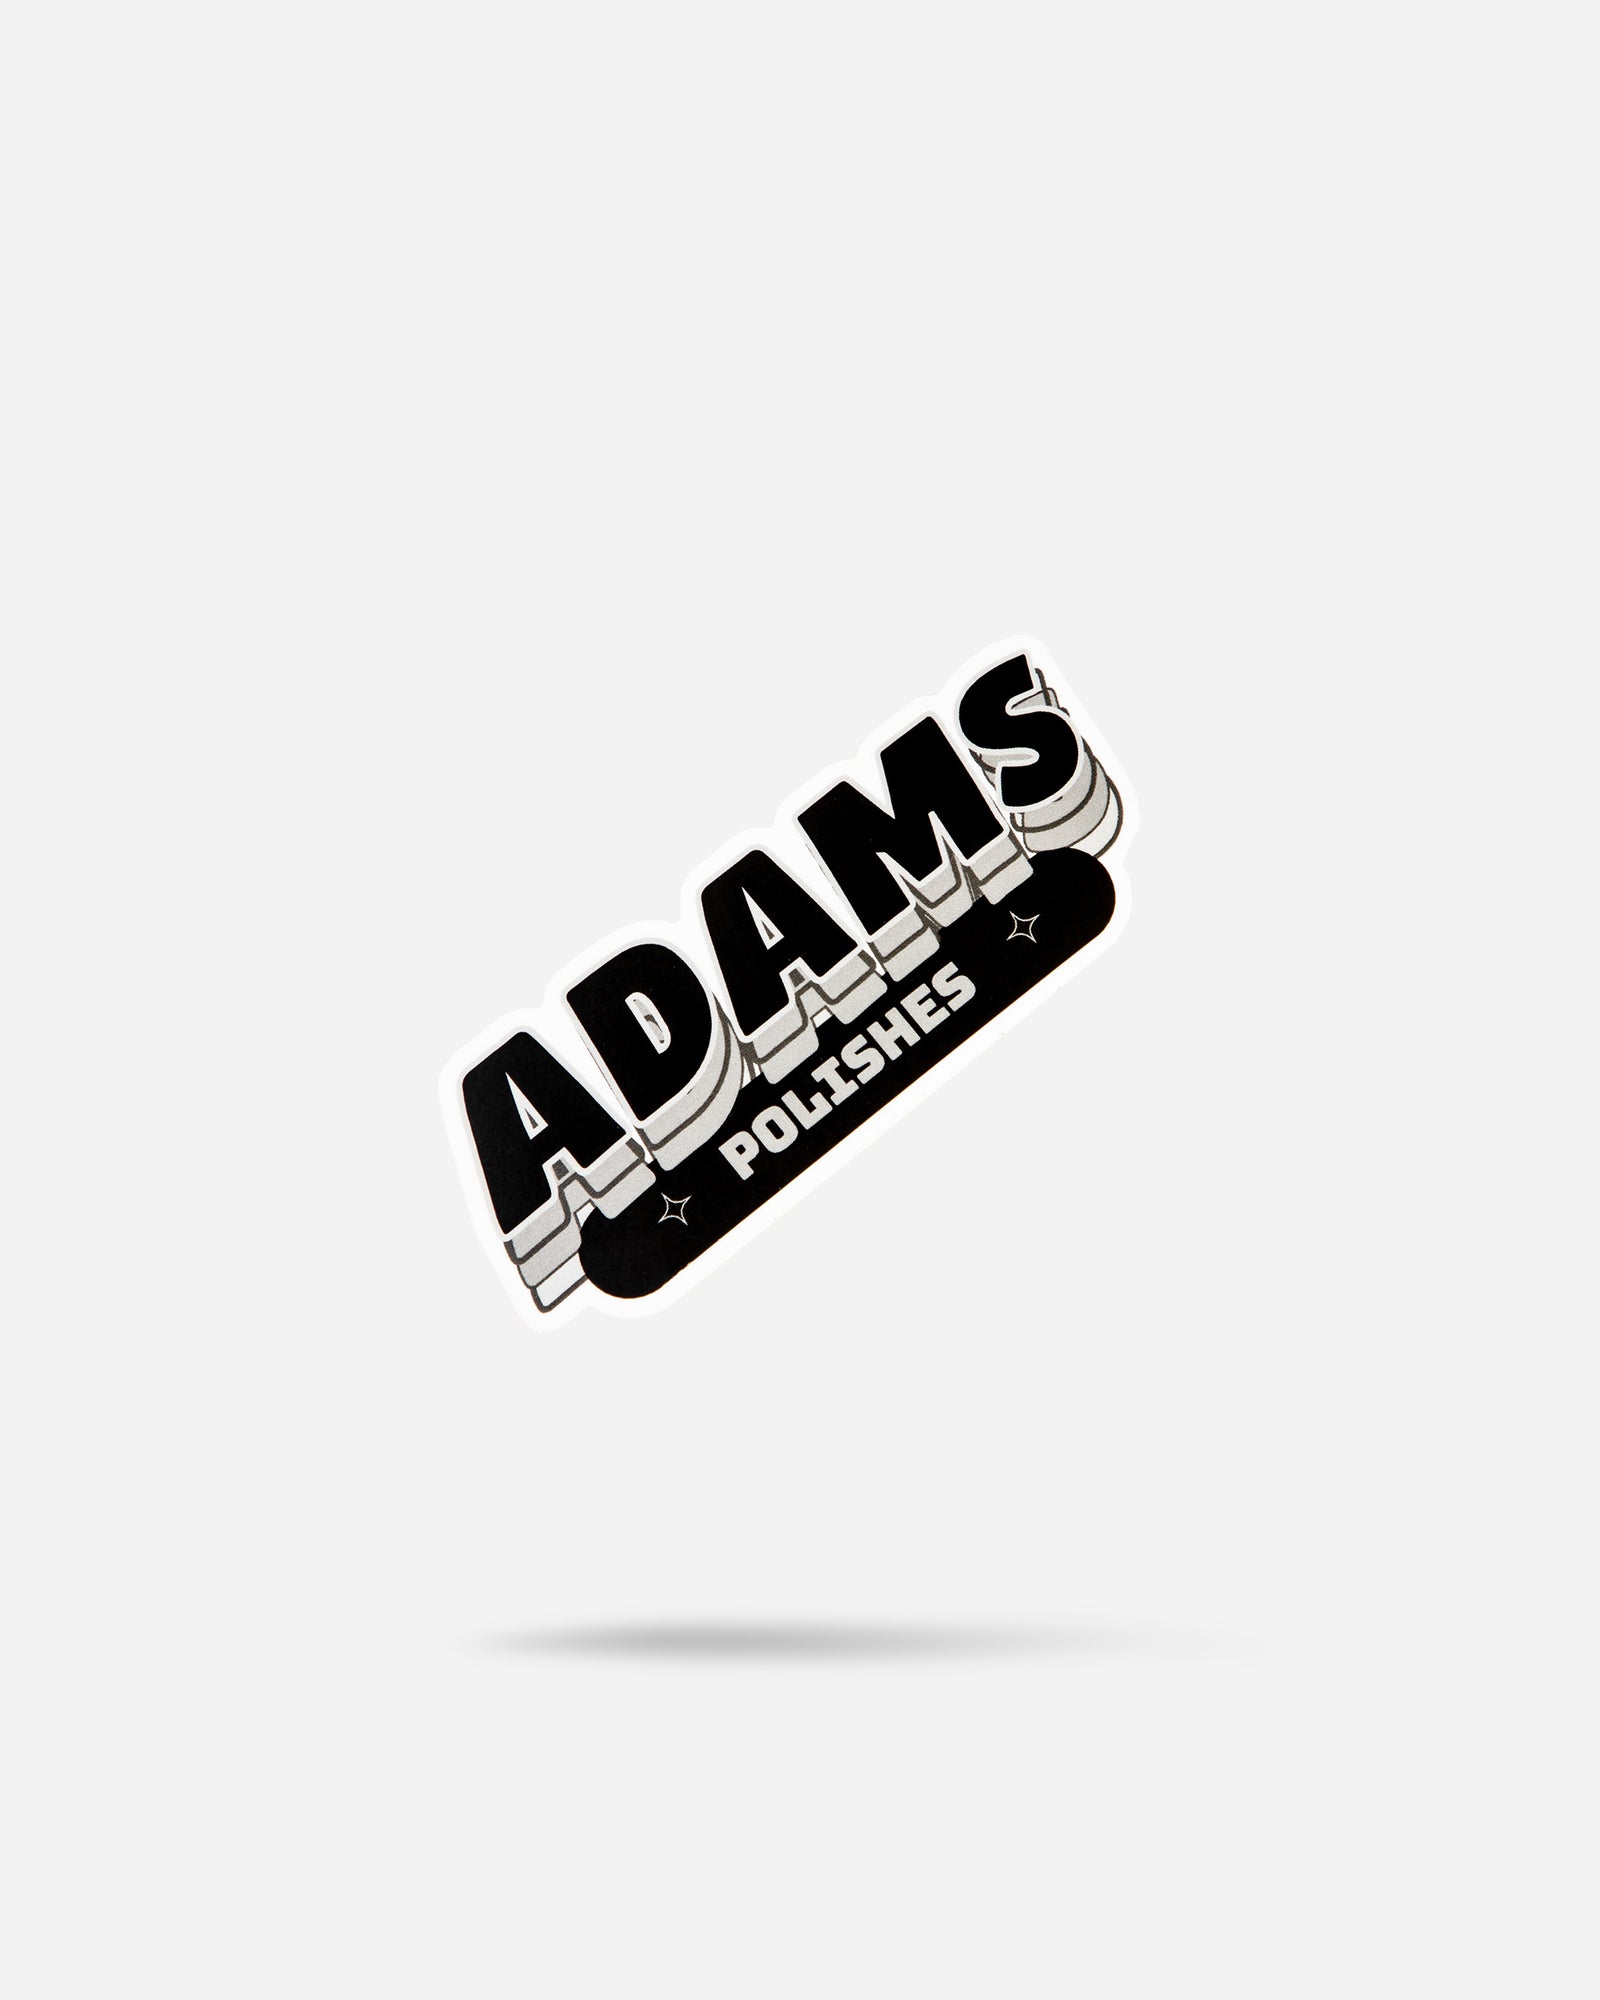 Adam's Cartoon Iron Remover Sticker - Adam's Polishes